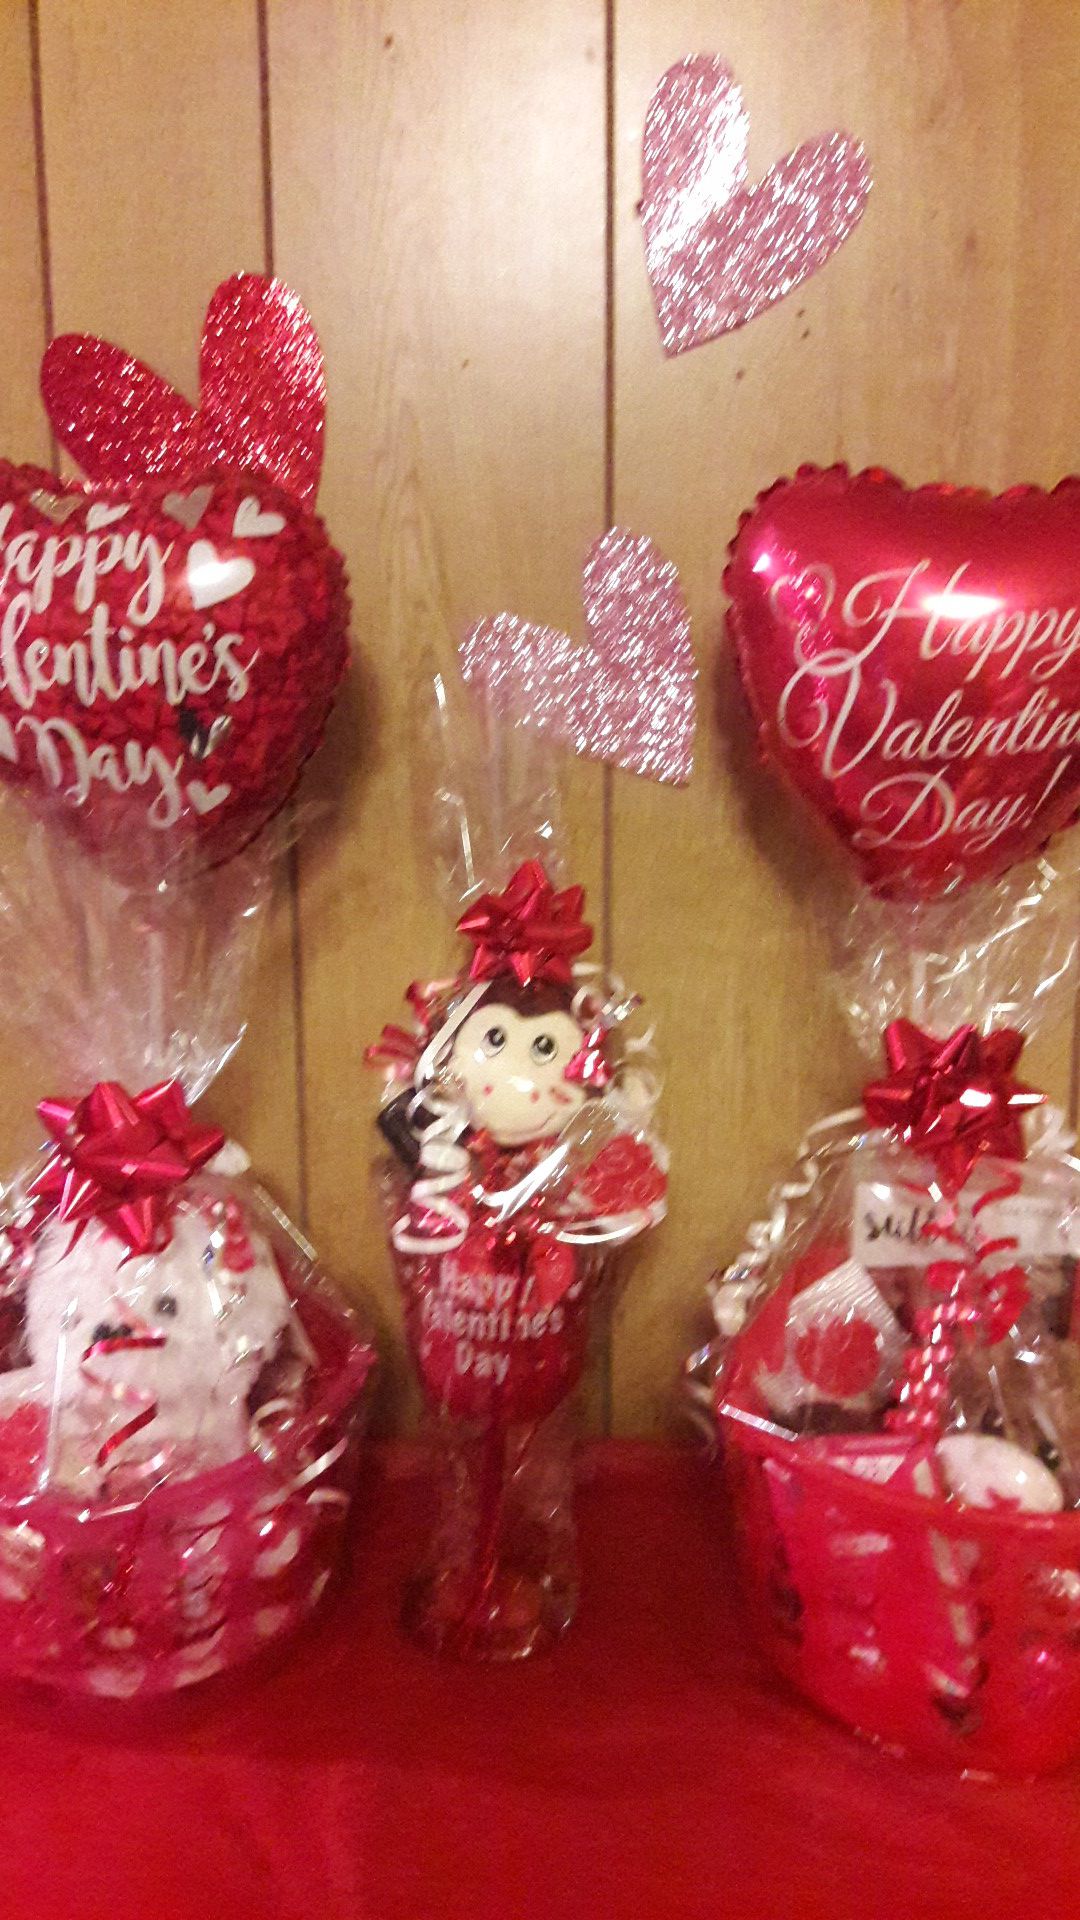 Valentine Arrangements. Glass $8 and baskets $15